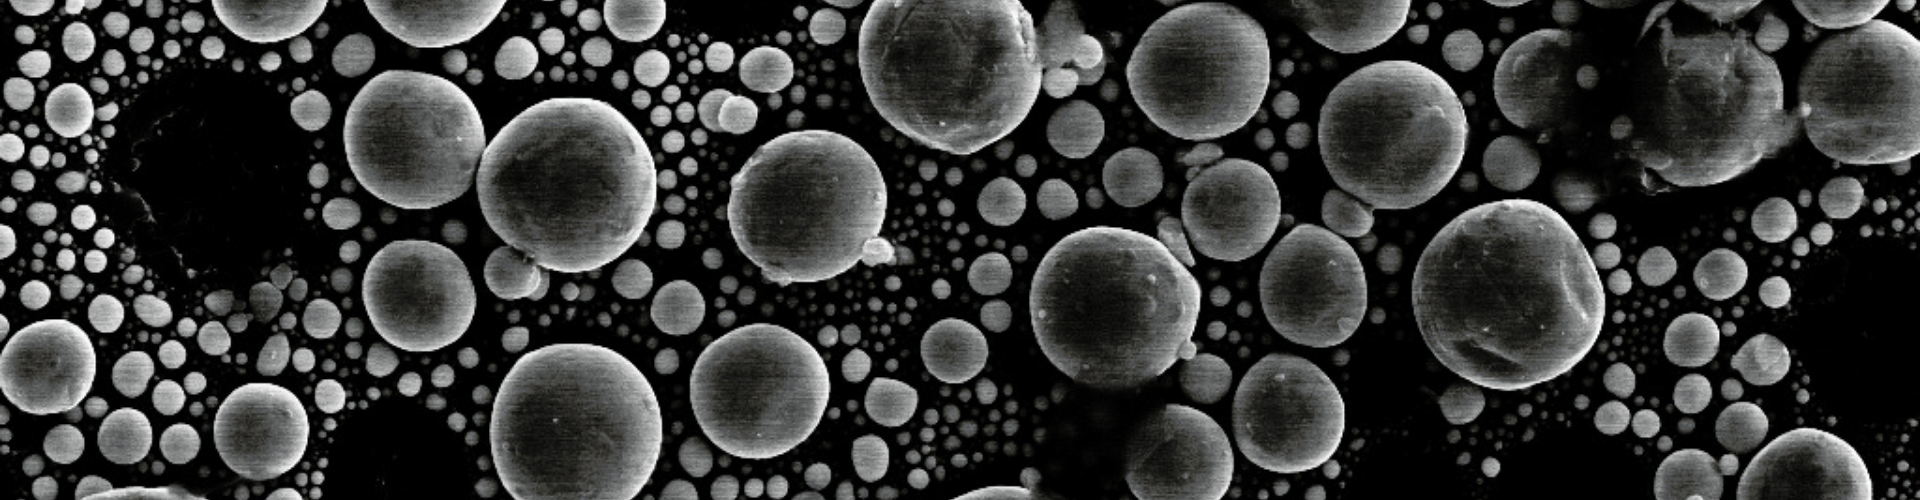 Scanning electron microscopy image of tin balls